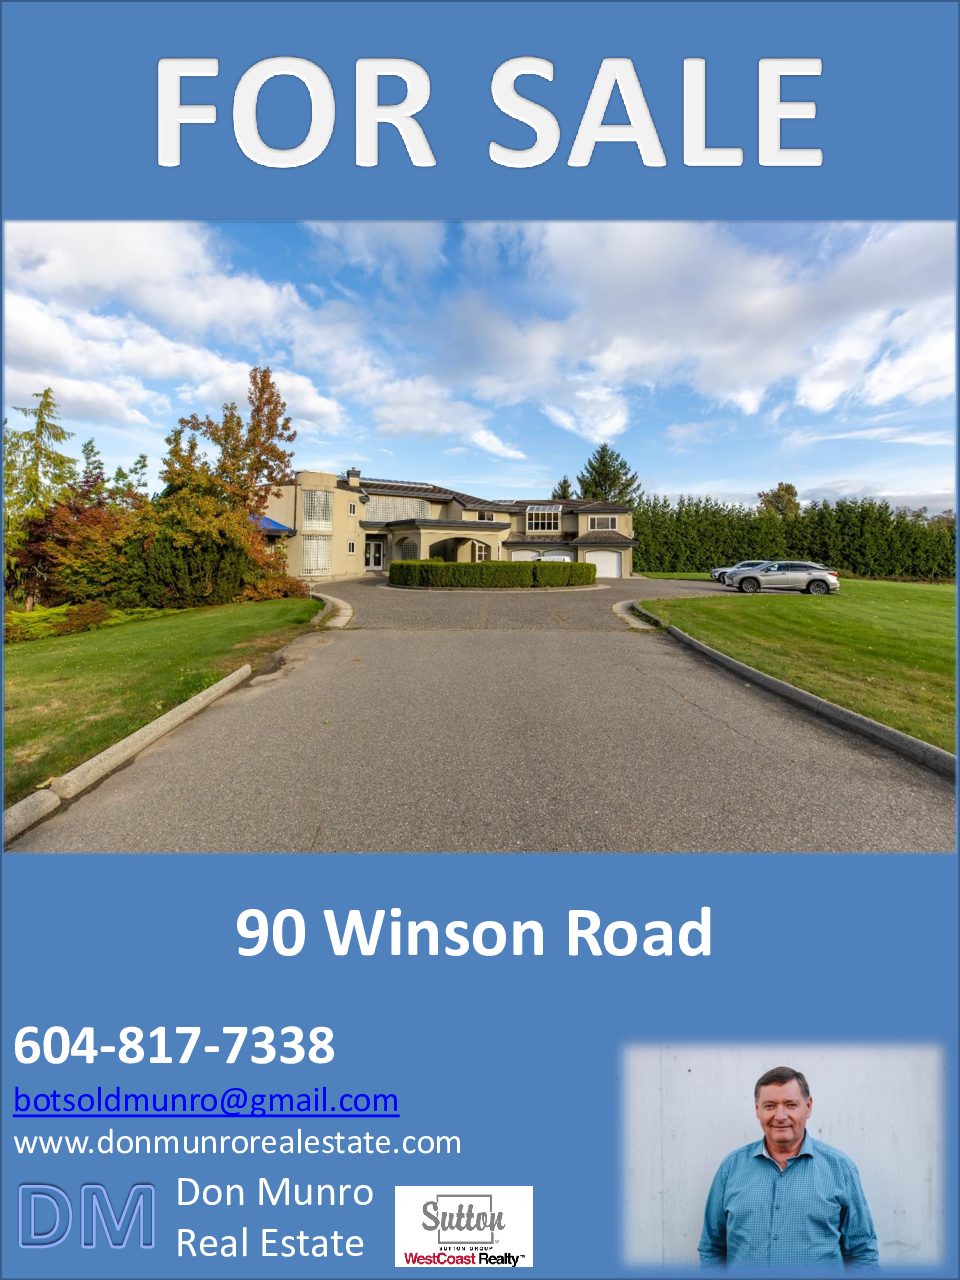 90 Winson Road Sales Package